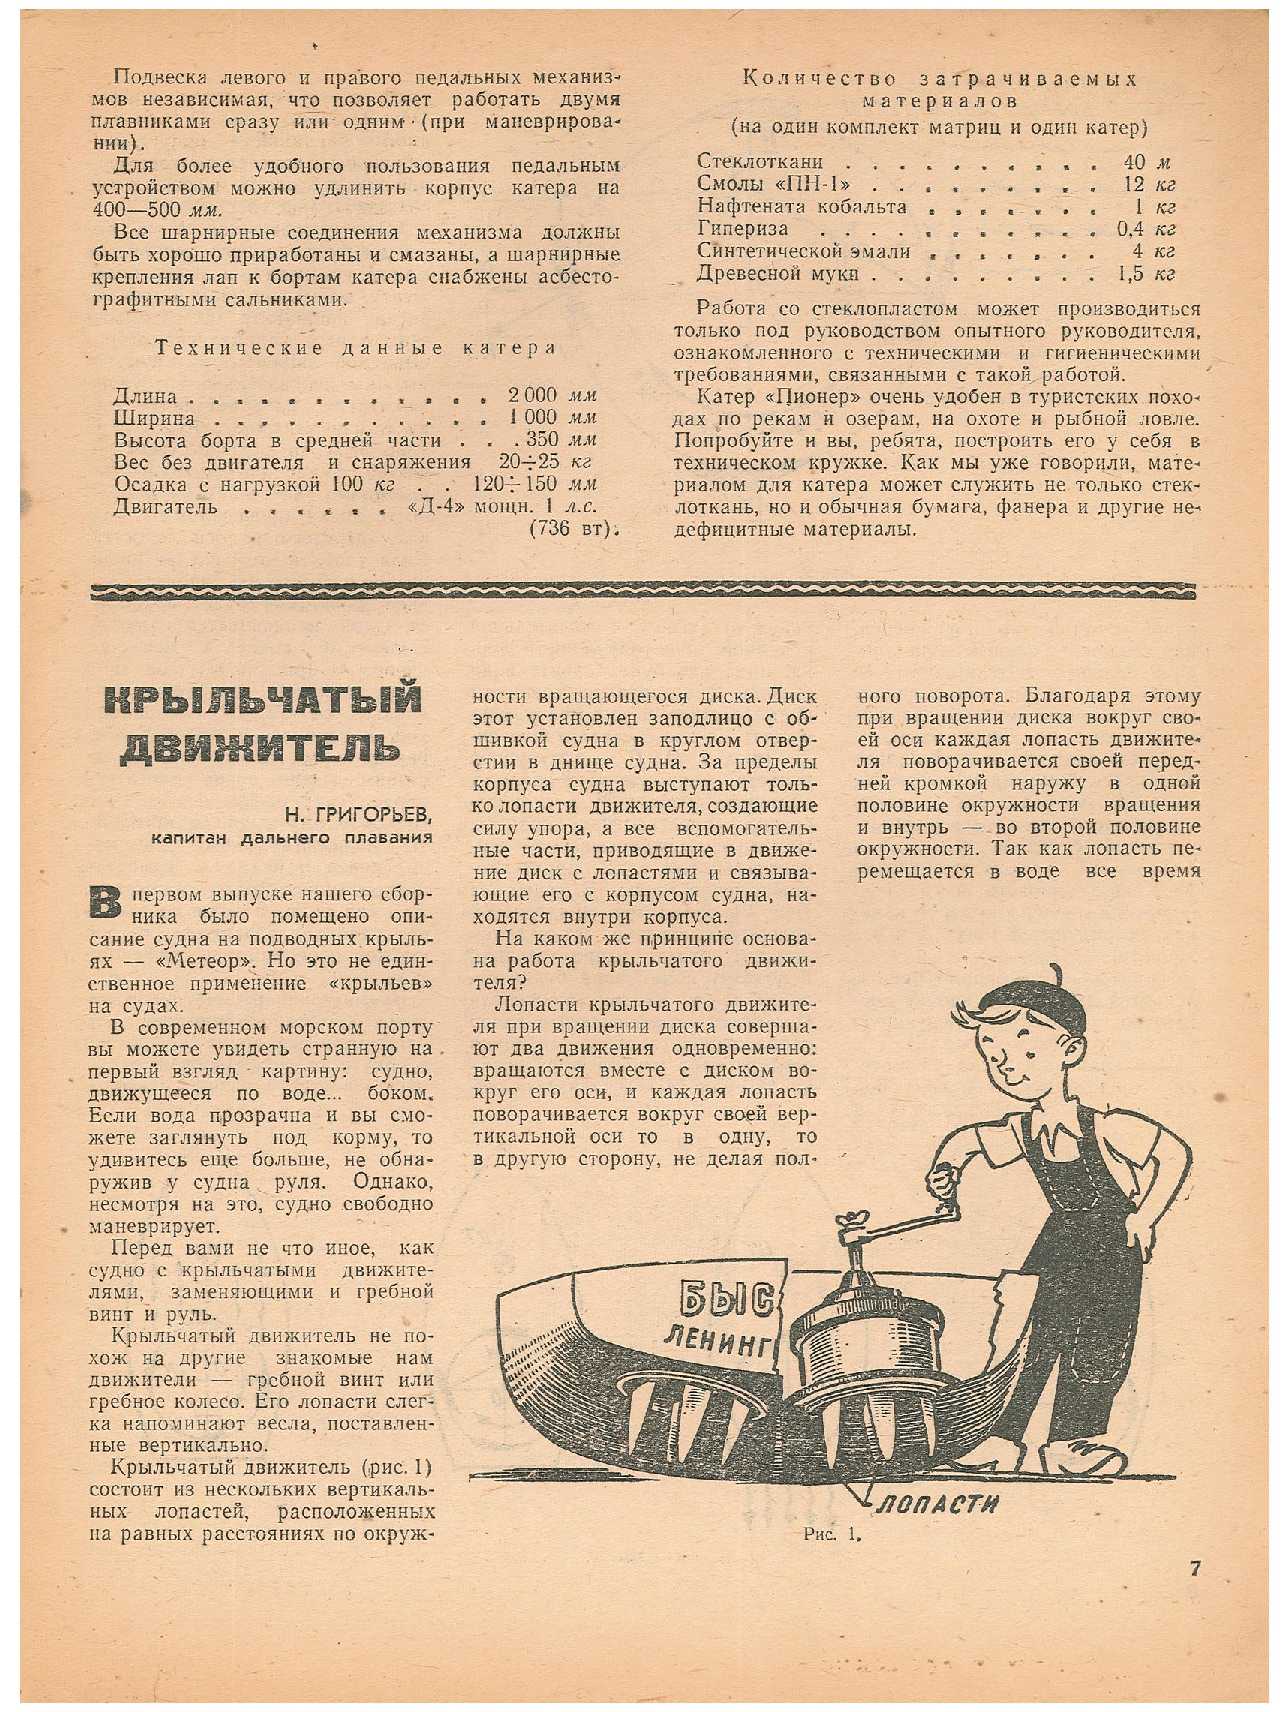 ЮМК 4, 1963, 7 c.